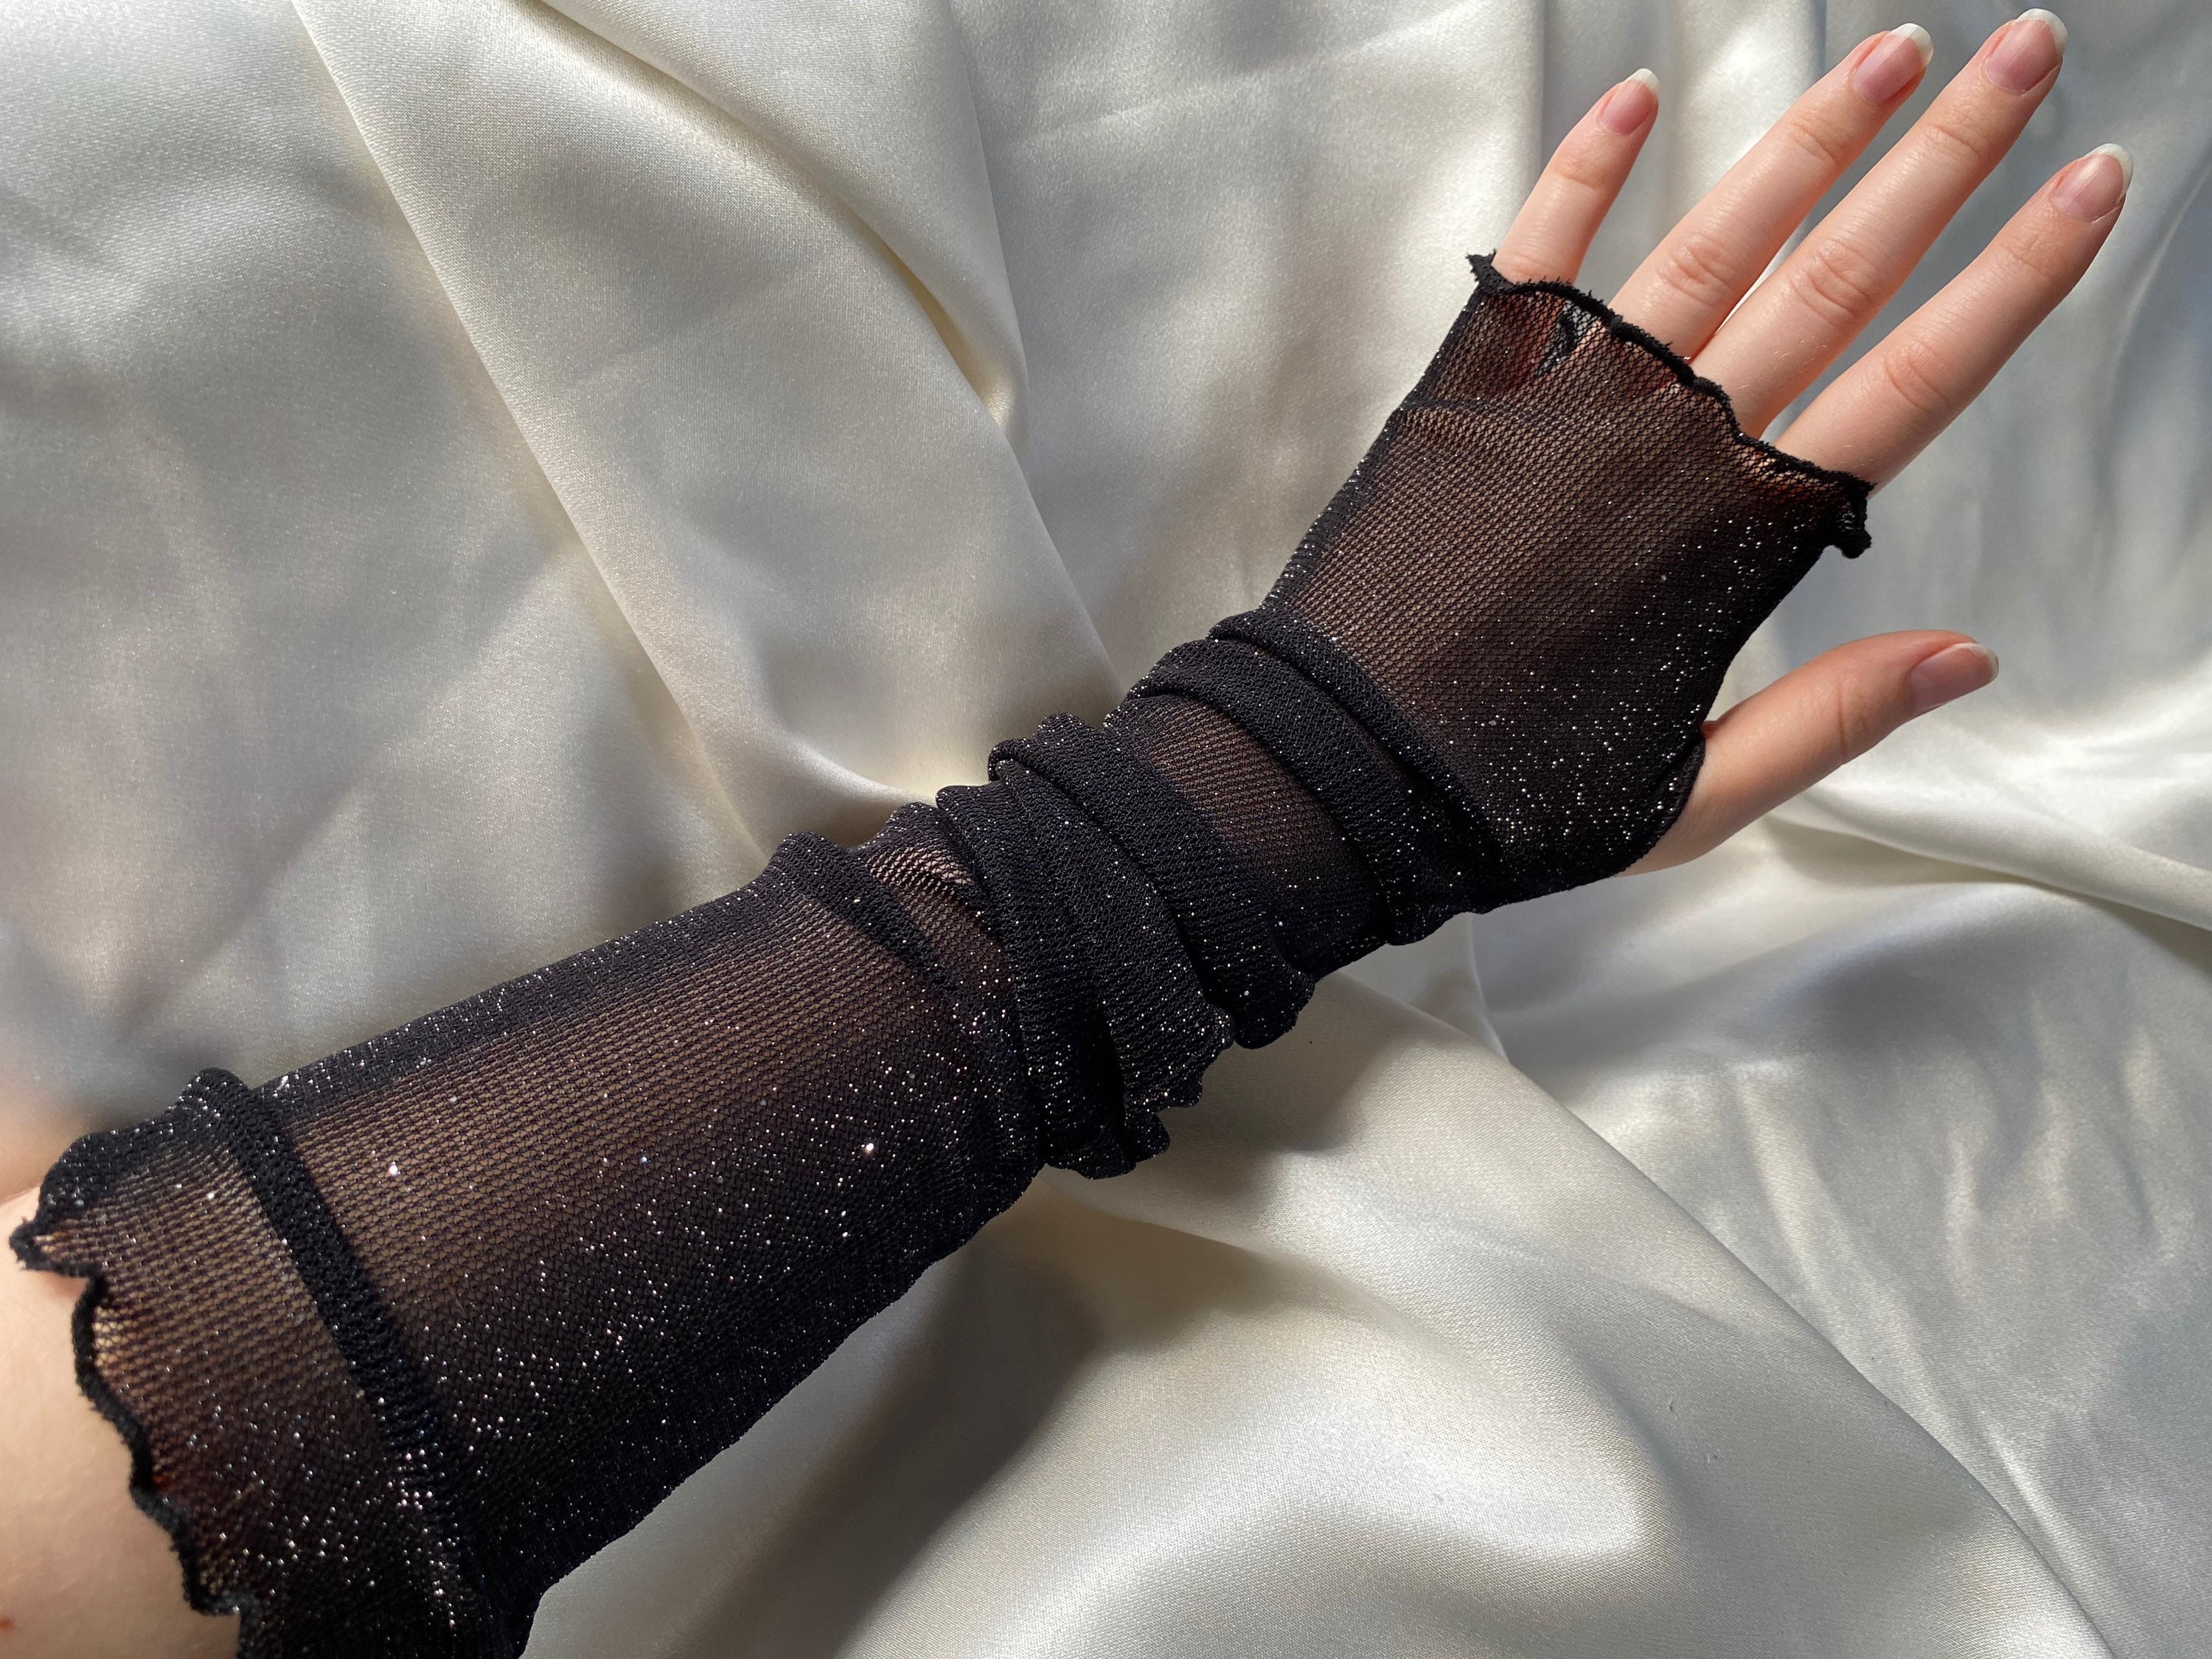 Black Sheer Gloves Wrist Ruffle - Flower Design, Glitter Accent - Party Dress Up